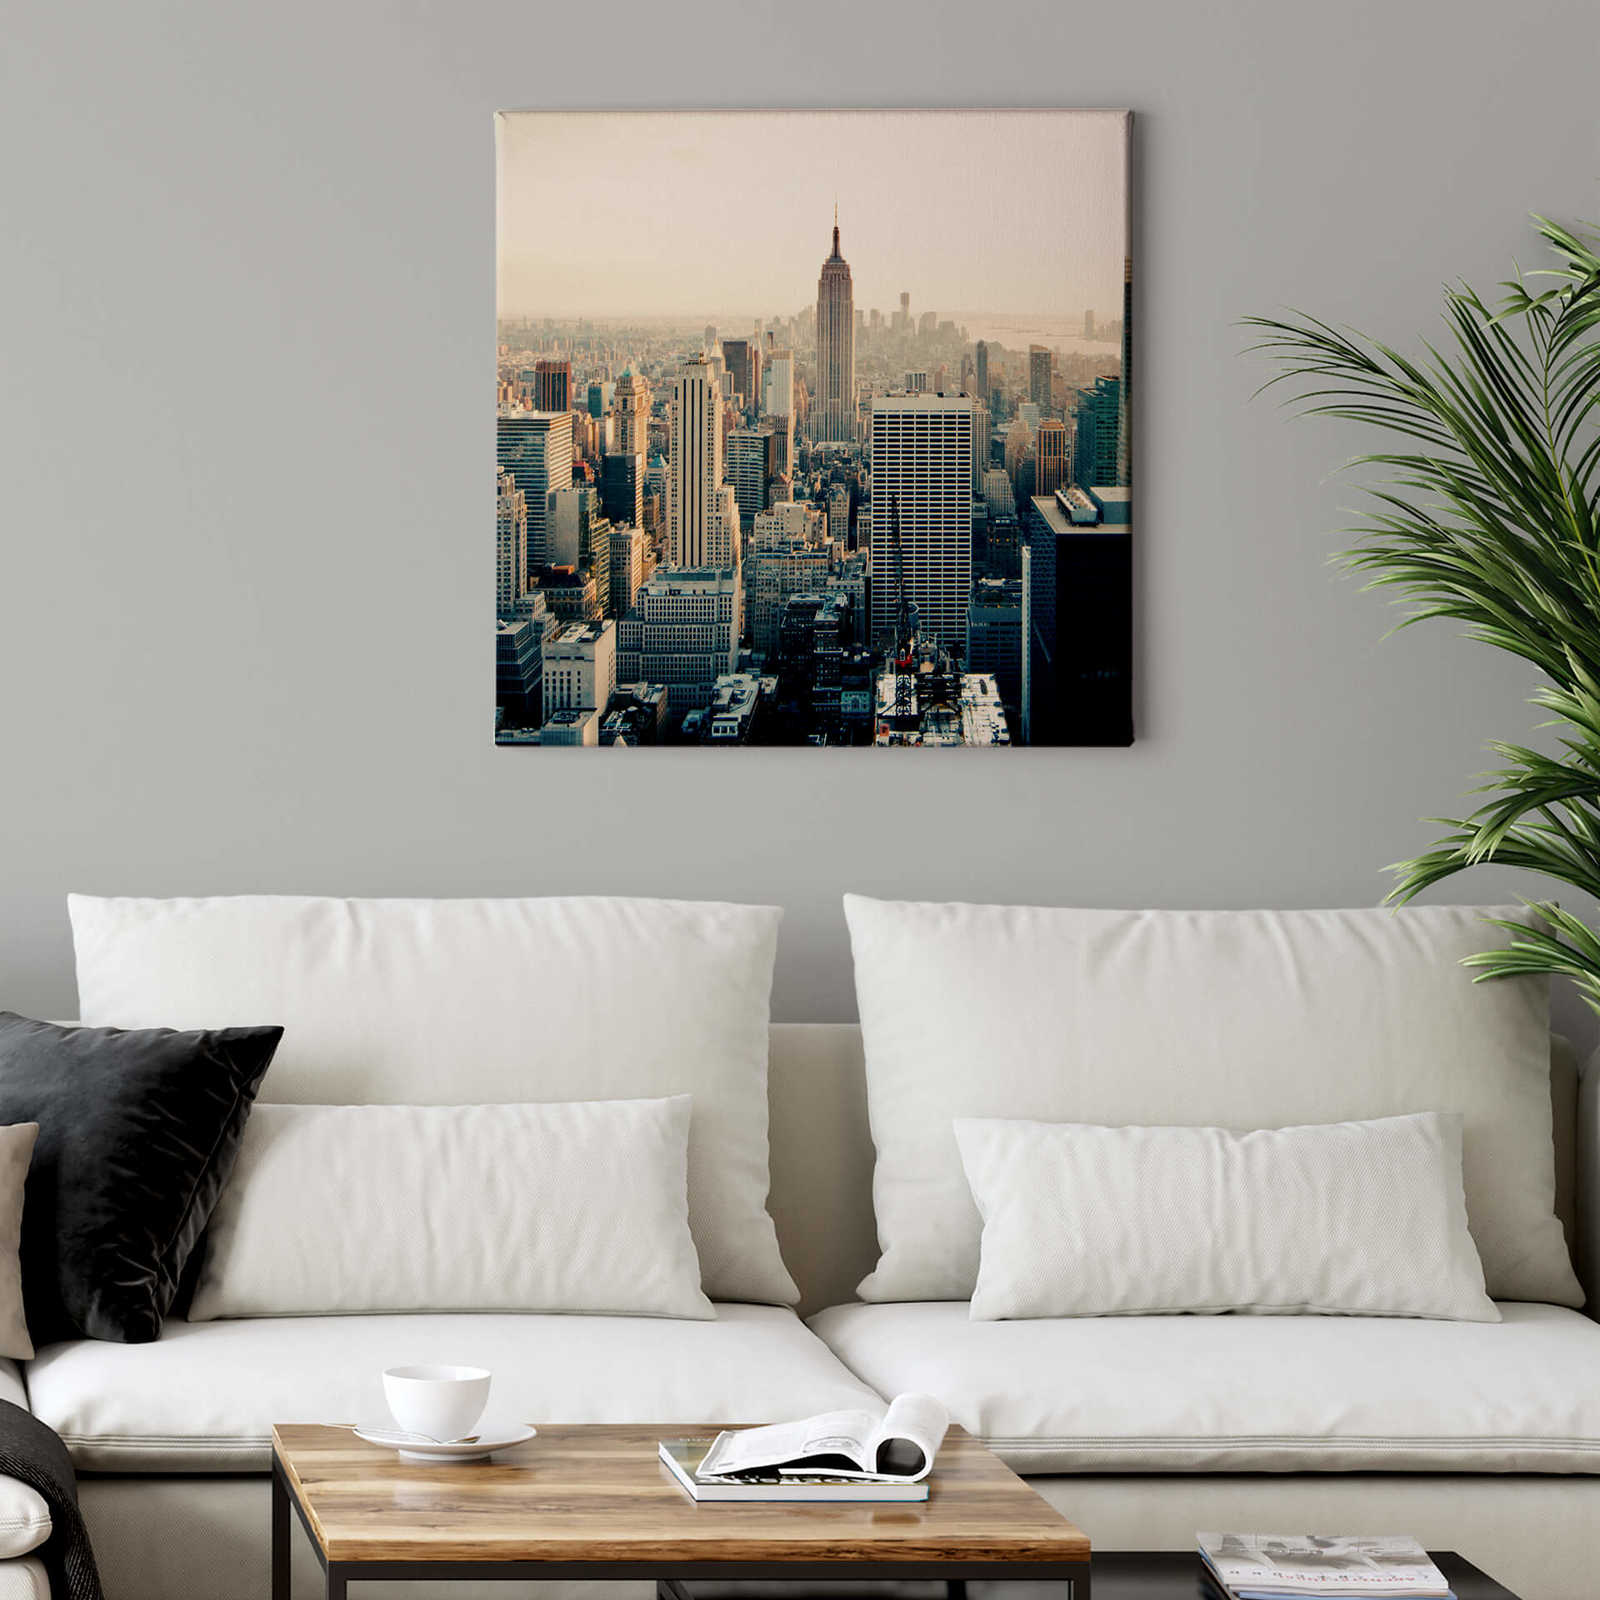             Square canvas print New York skyline, Empire State Building
        